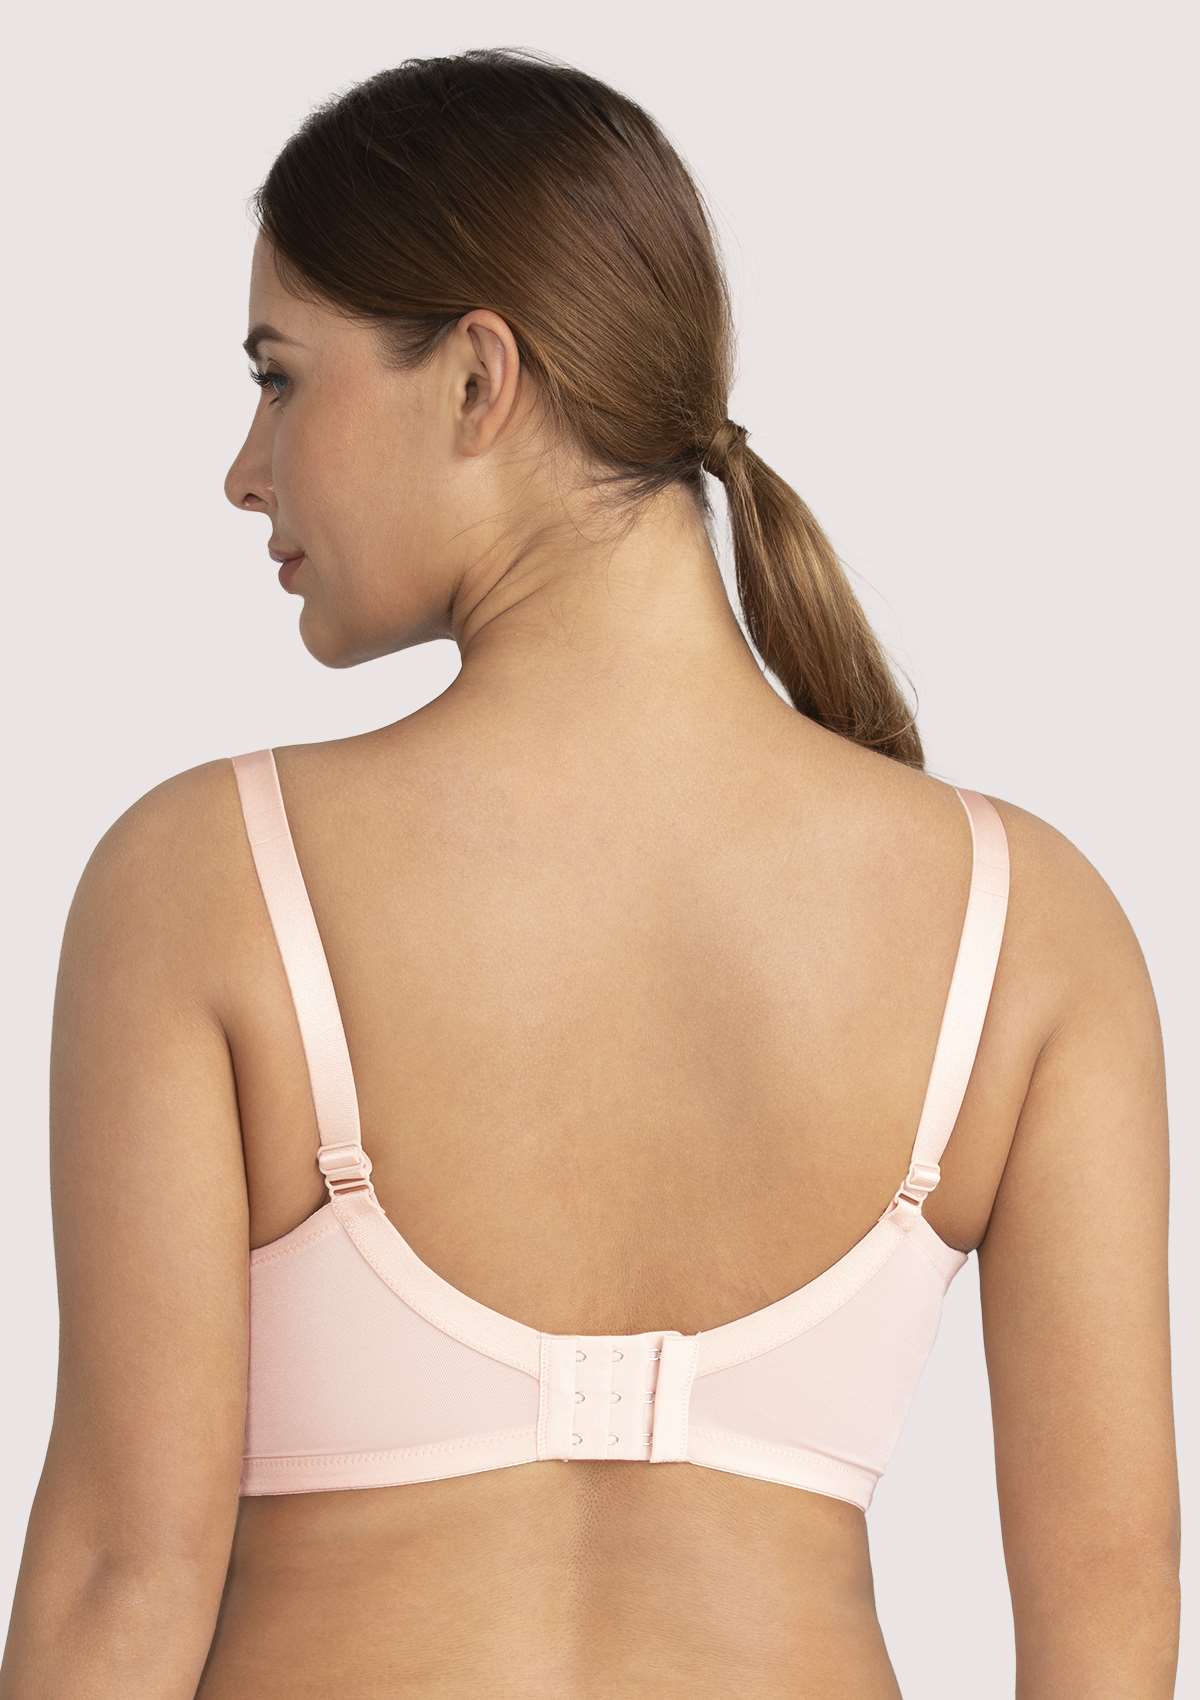 HSIA Sunflower Matching Bra And Panties Set: Comfortable Plus Size Bra - Pink / 34 / D